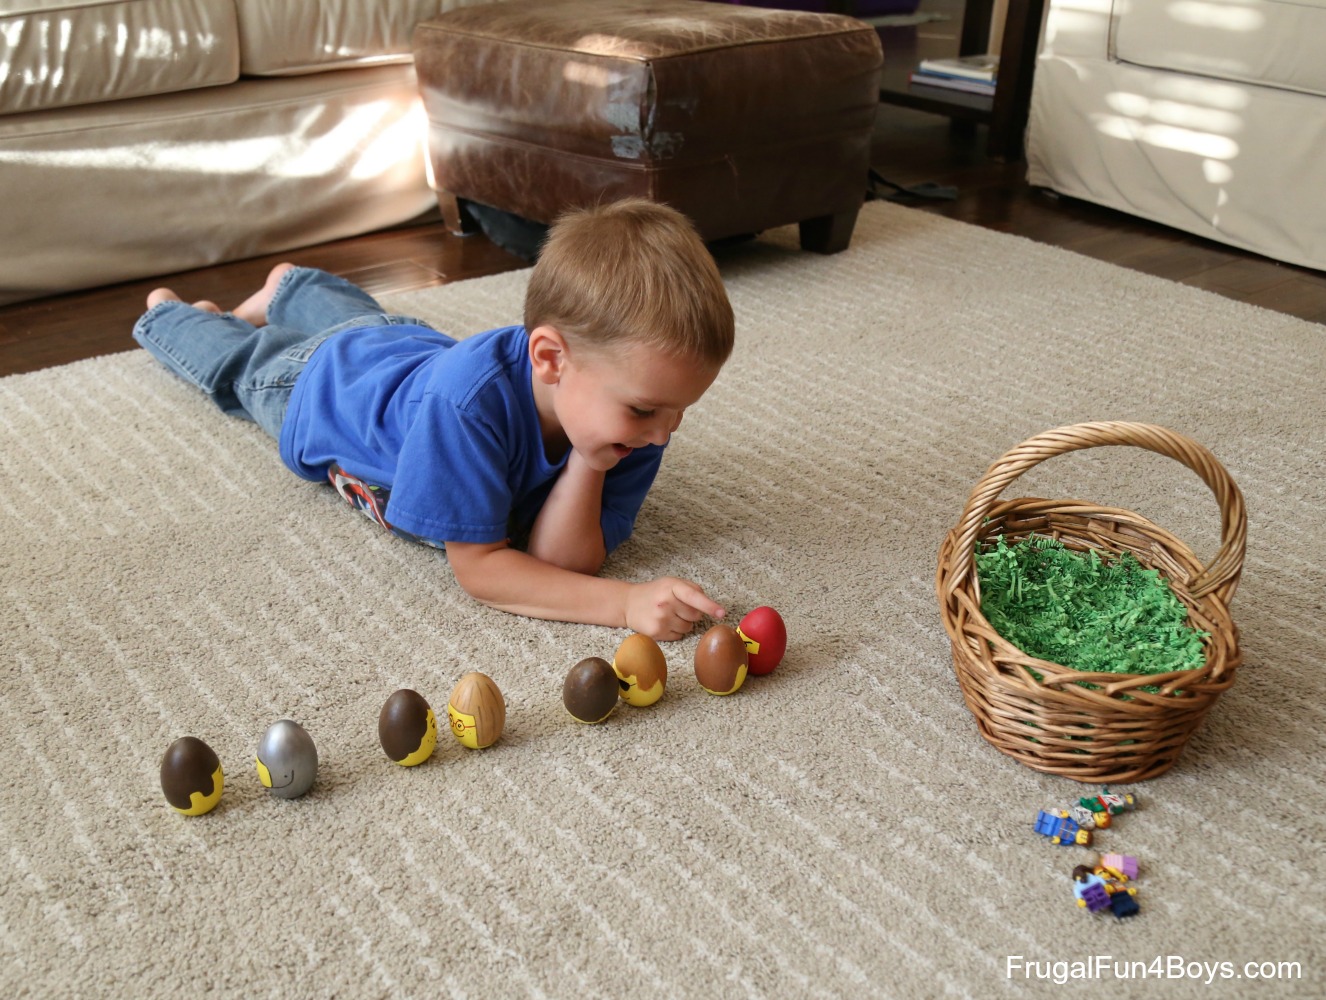 LEGO Minifigure Easter Eggs